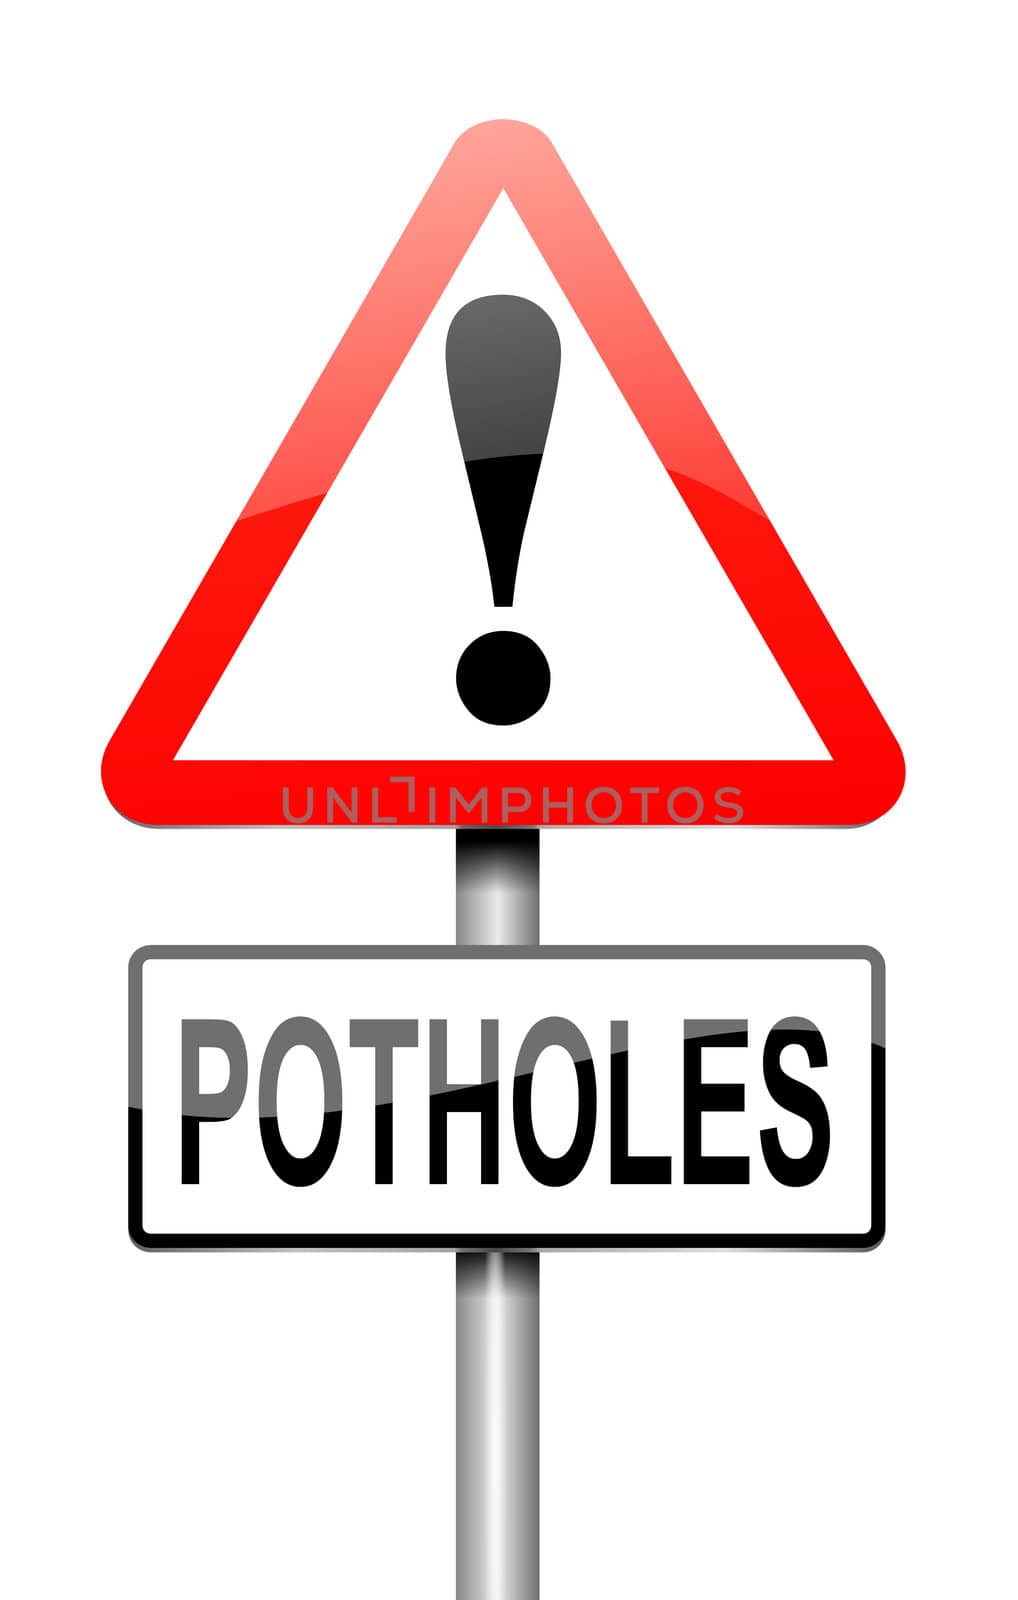 Potholes warning sign. by 72soul